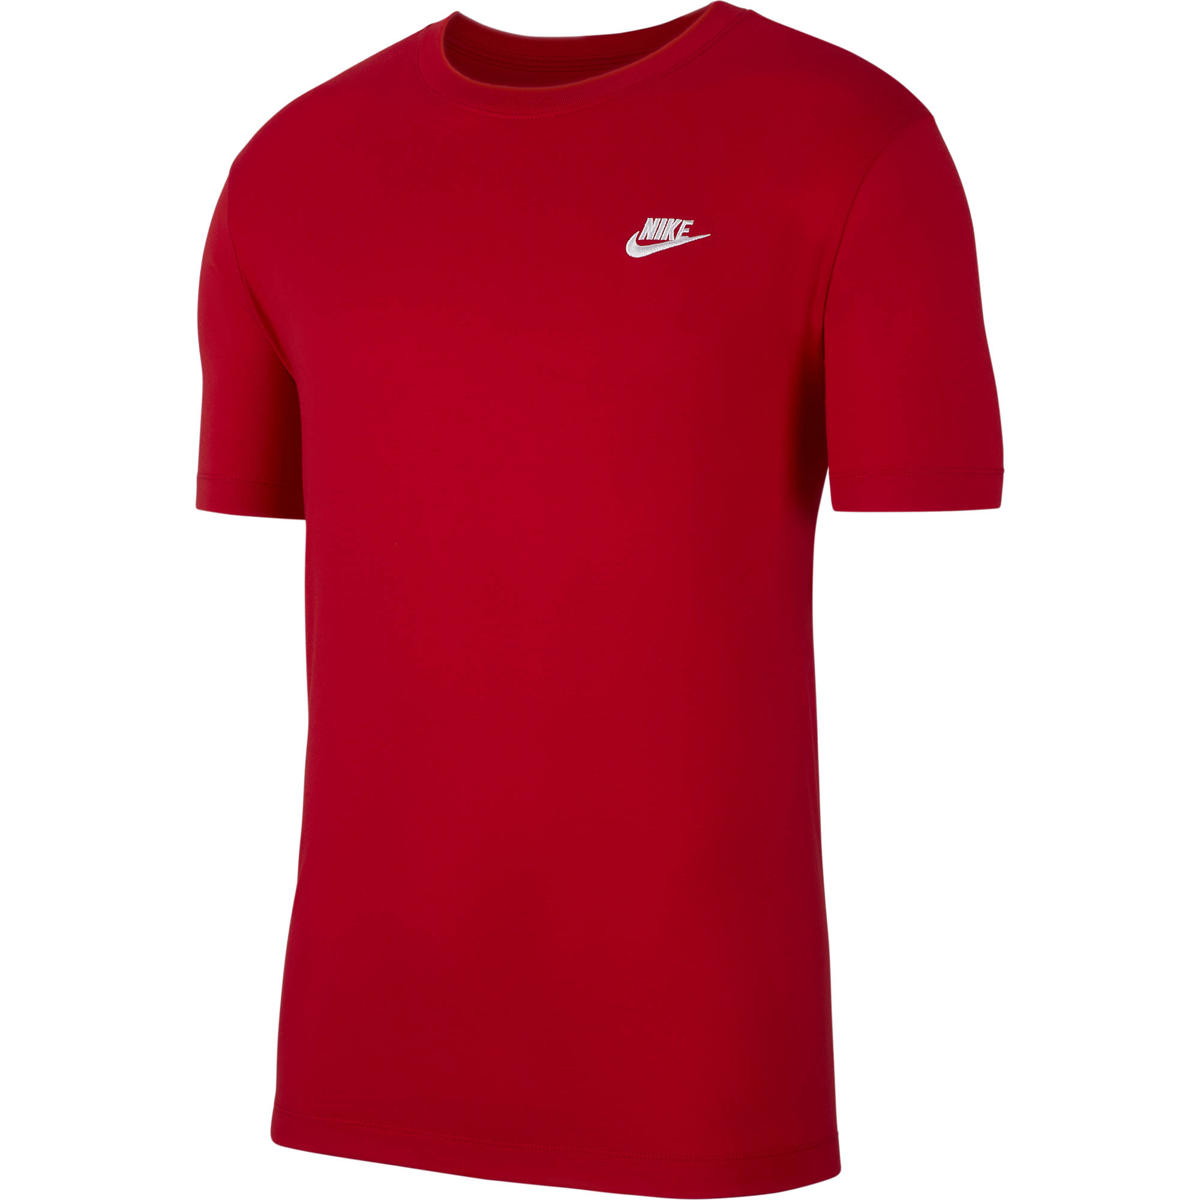 Eindig beloning Ontwapening Nike T-shirt rood/wit kopen? | Morgen in huis | wehkamp